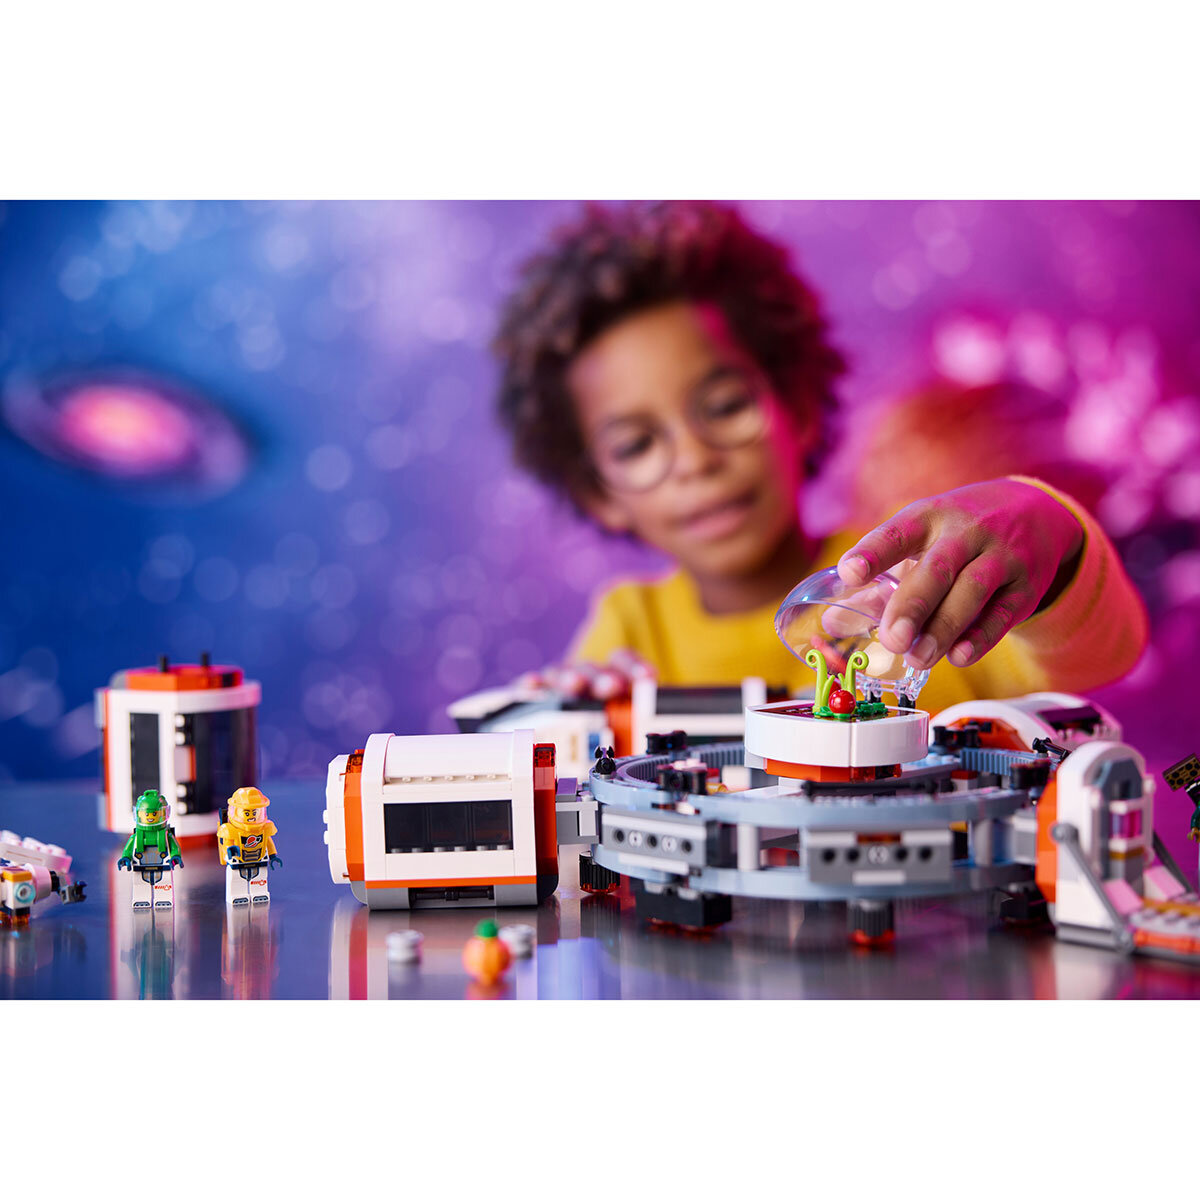 Buy LEGO City Modular Space Station Lifestyle Image at Costco.co.uk